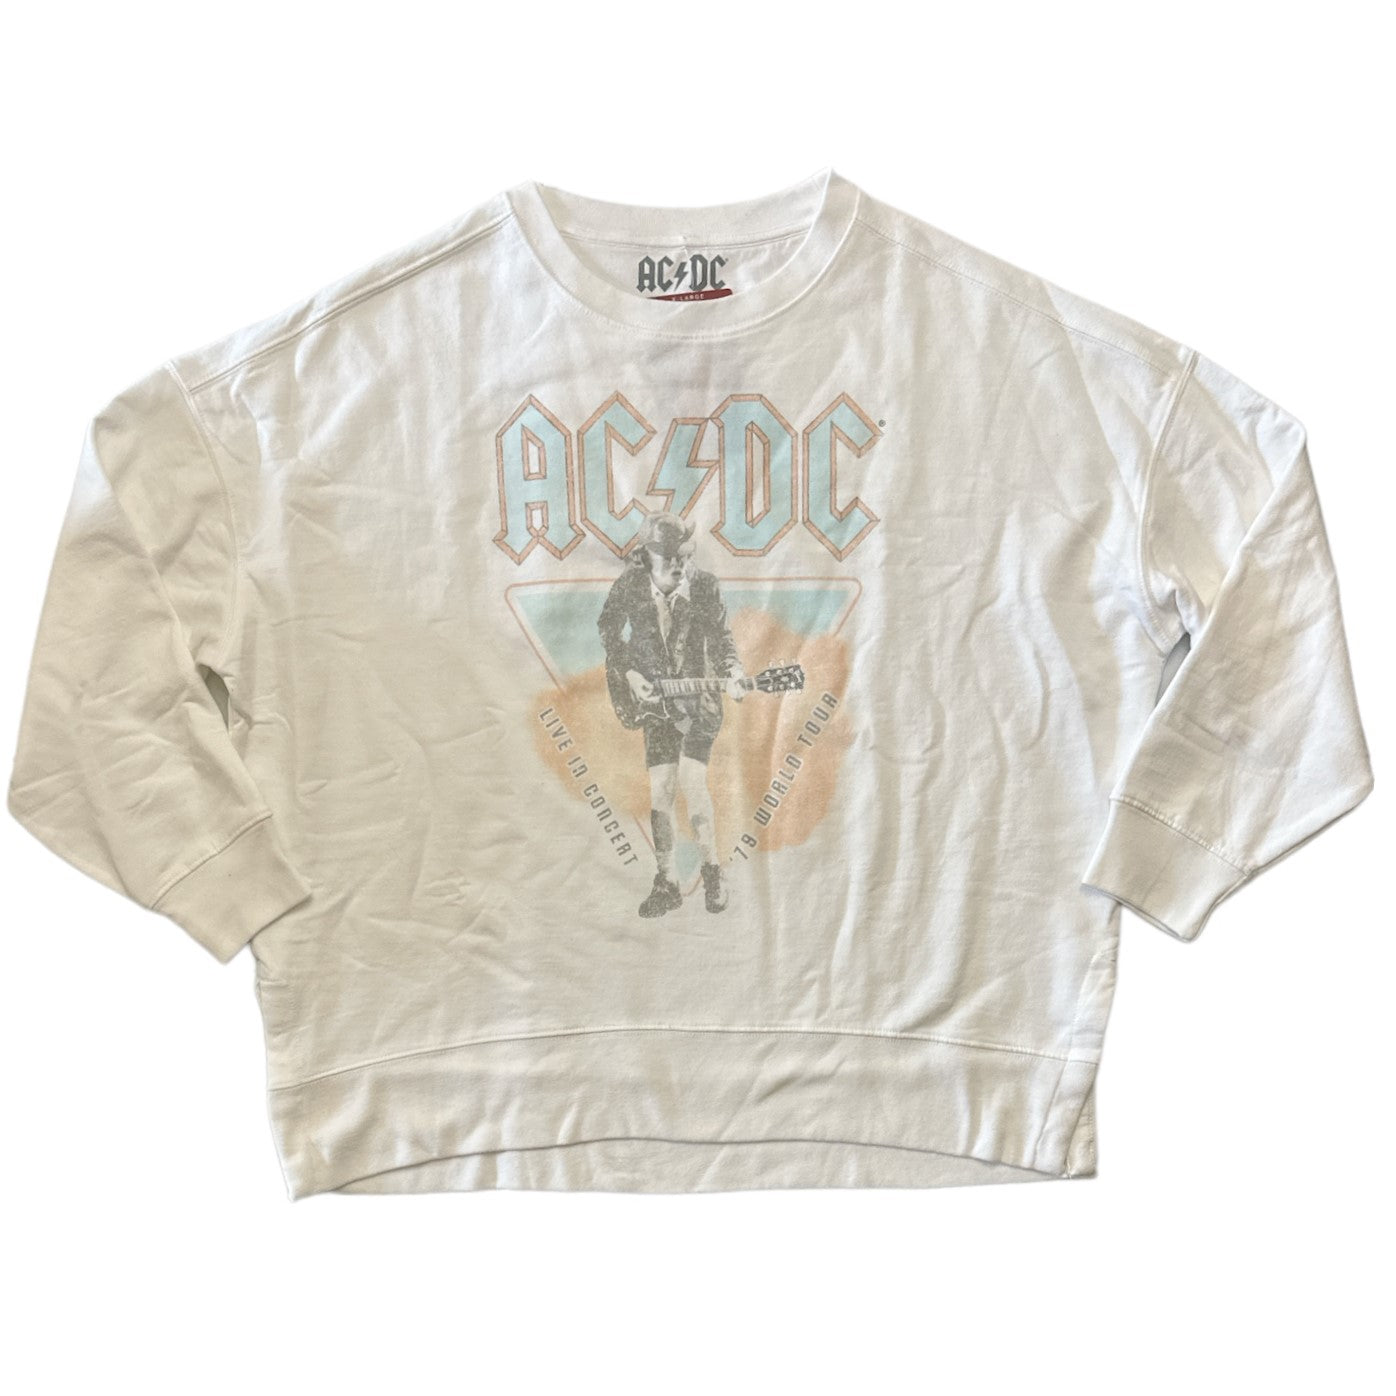 AC/DC Women's Fleece Lined Crewneck Band Graphic Print Sweatshirt